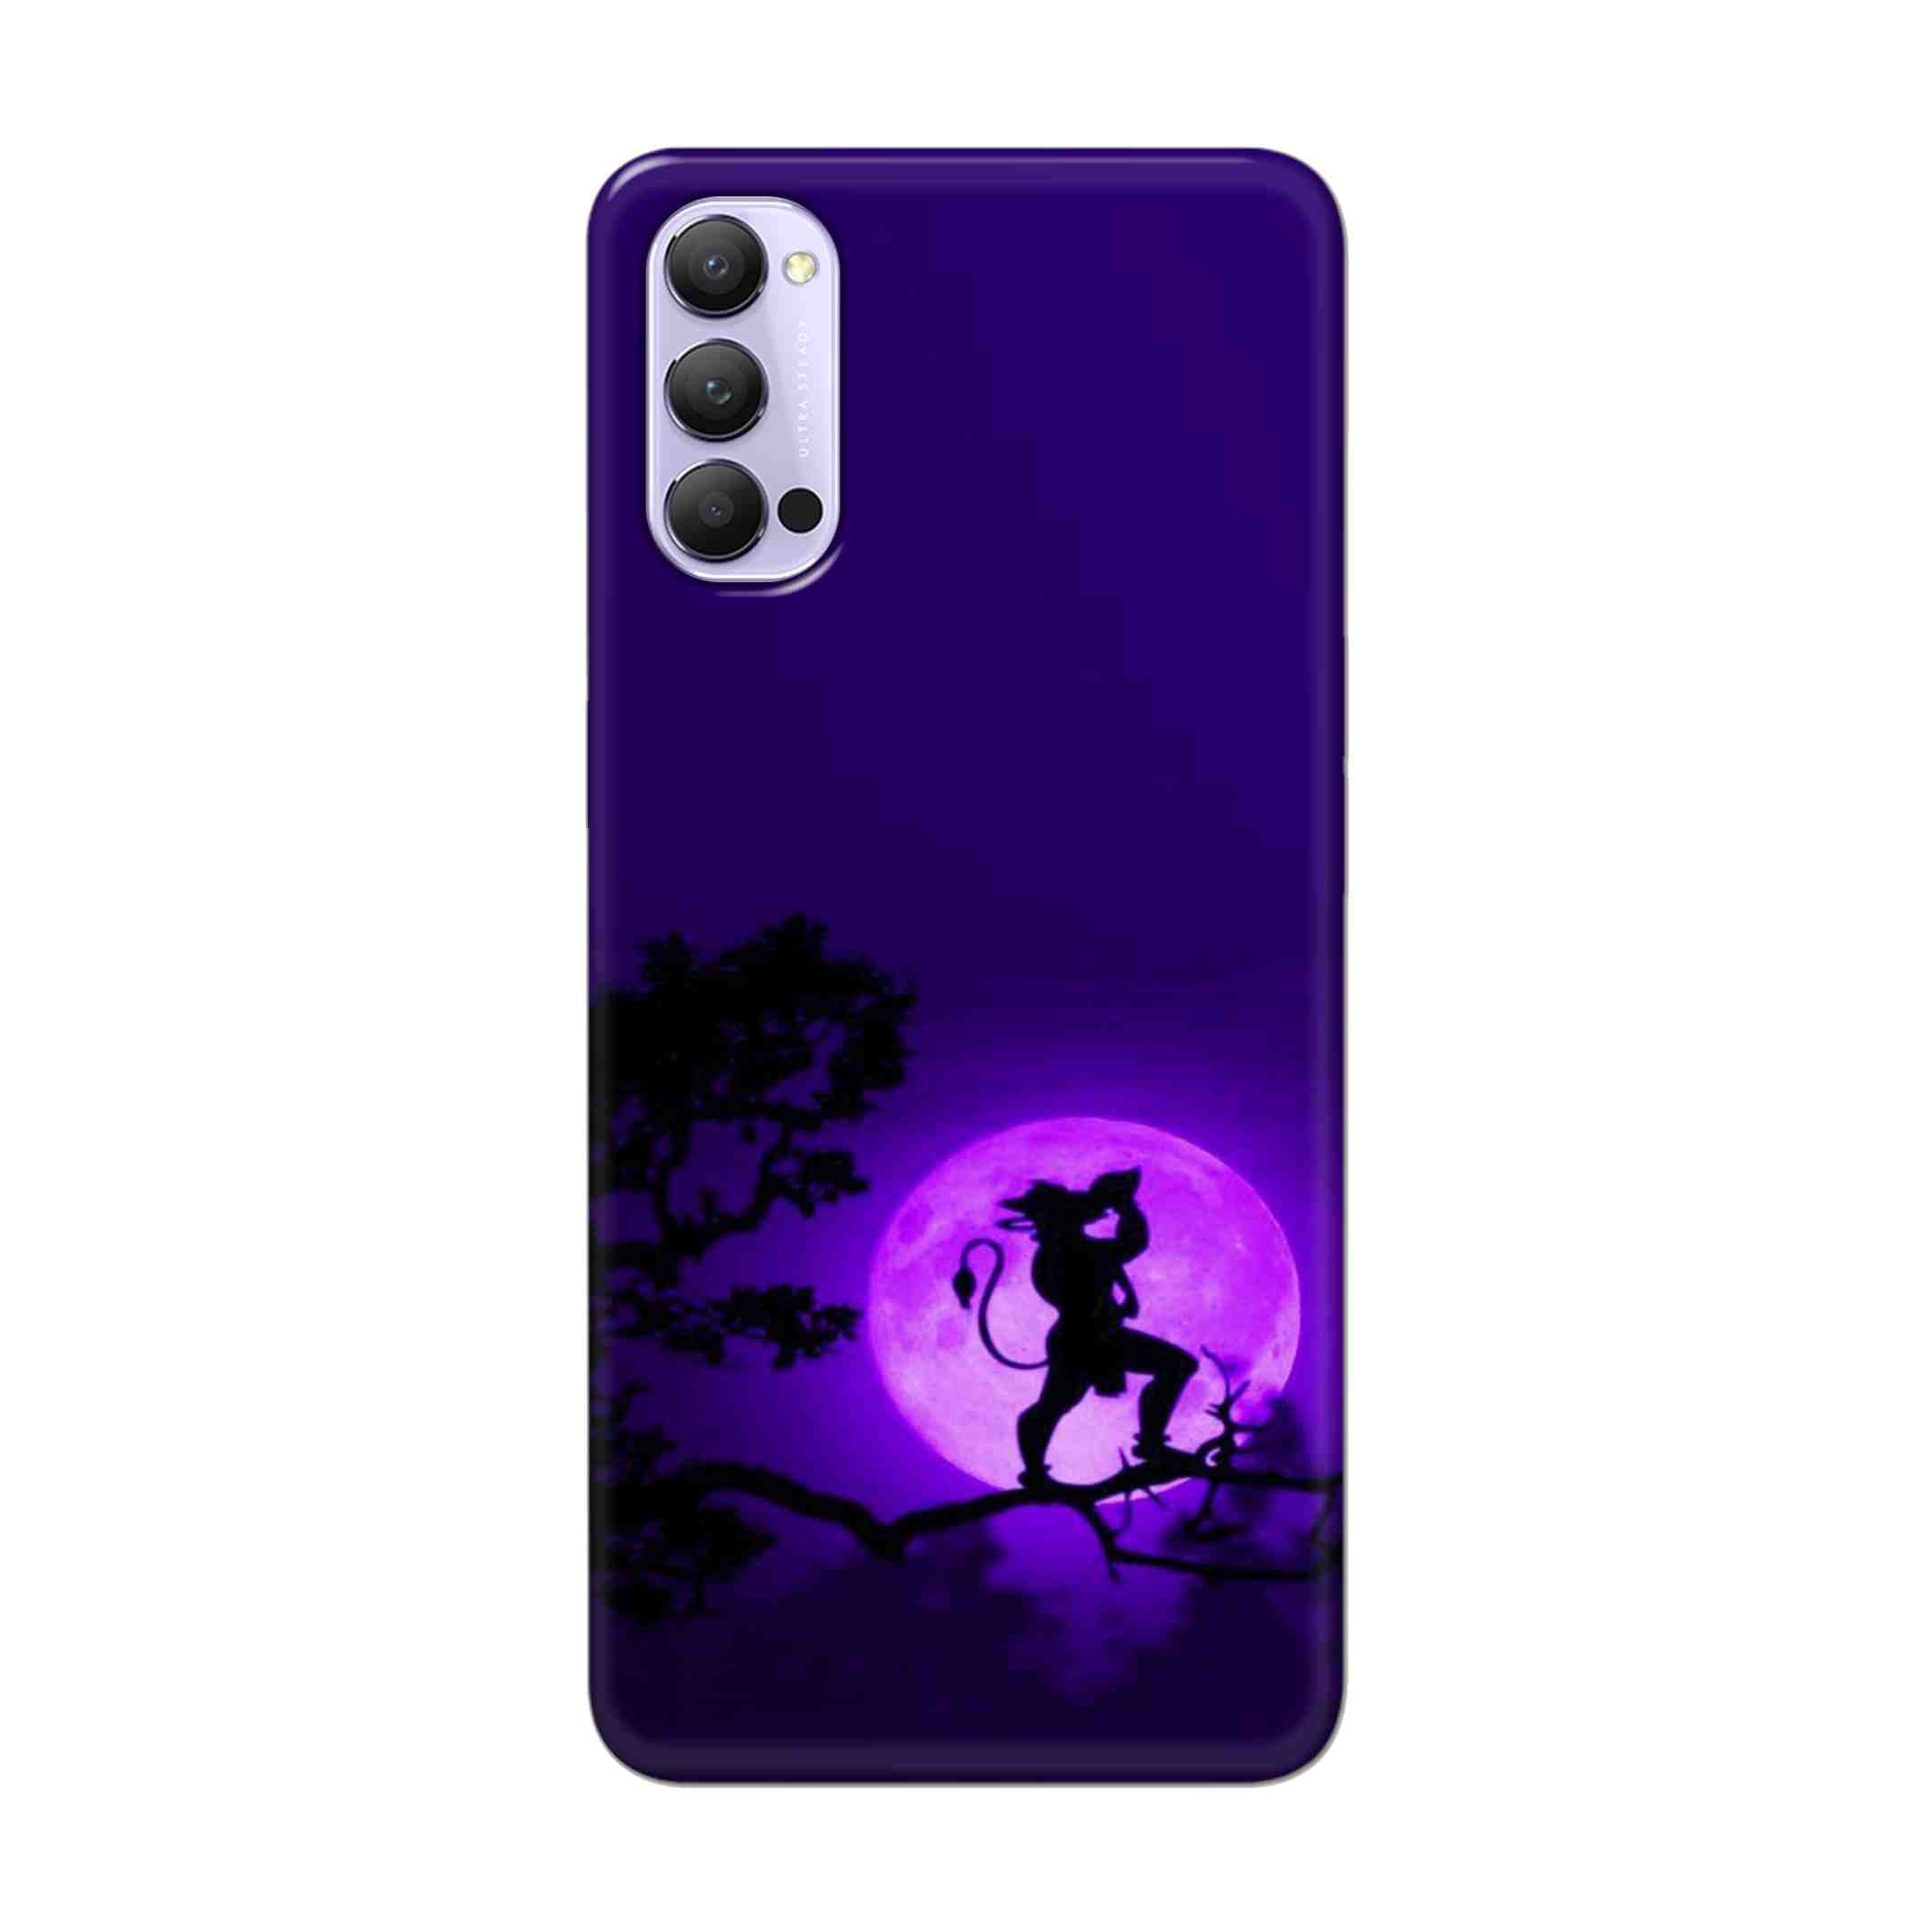 Buy Hanuman Hard Back Mobile Phone Case Cover For Oppo Reno 4 Pro Online